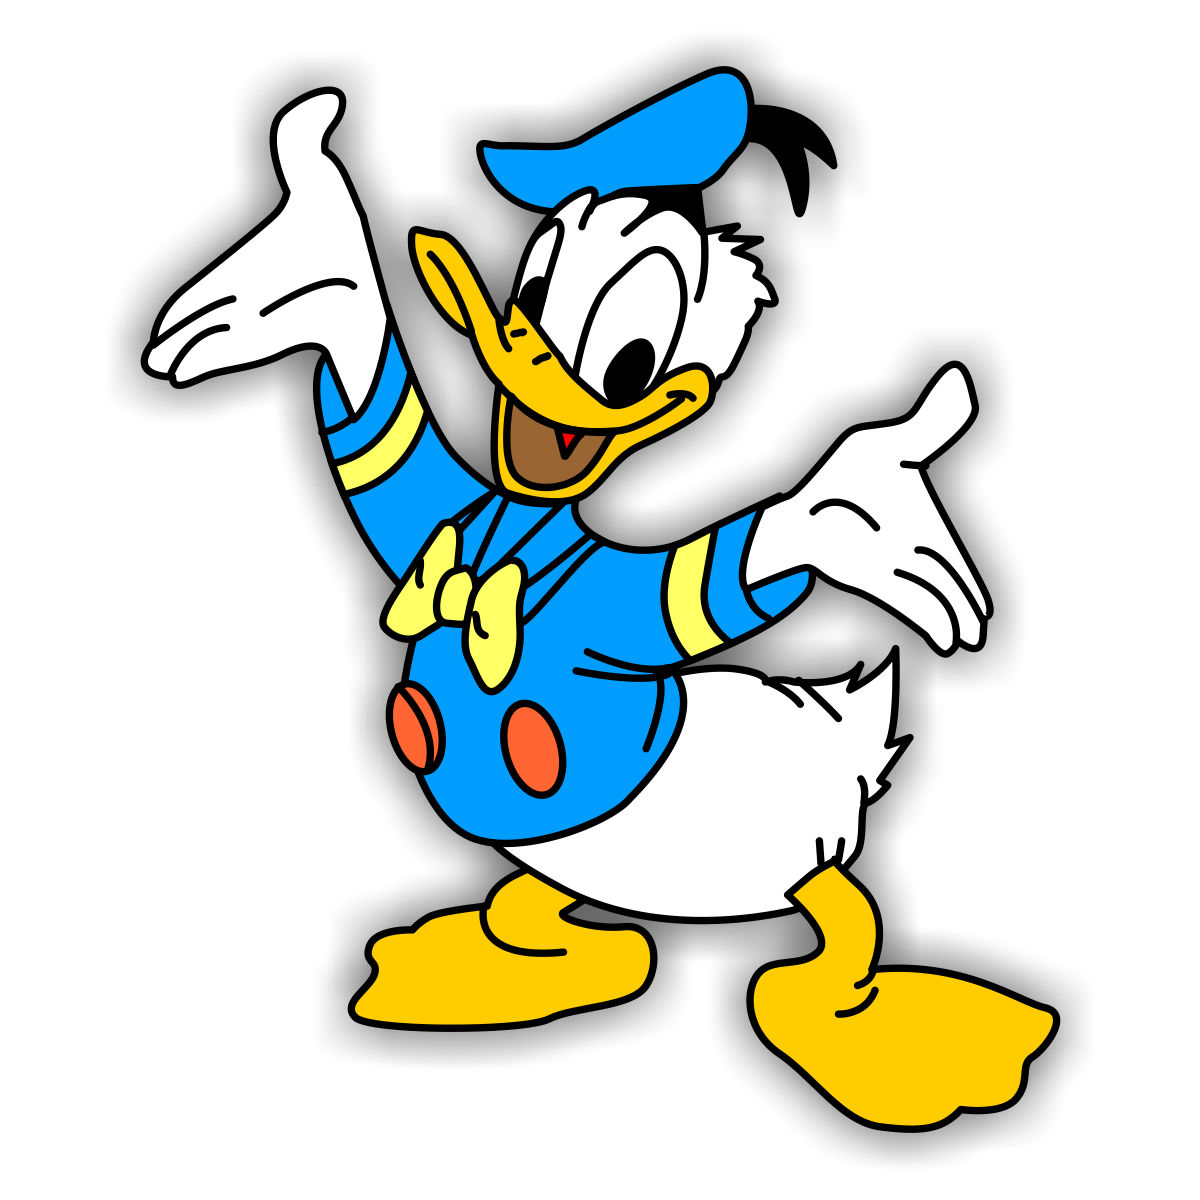 Donald Duck Wallpaper Cartoon Pictures - Free Download Wallpaper ...